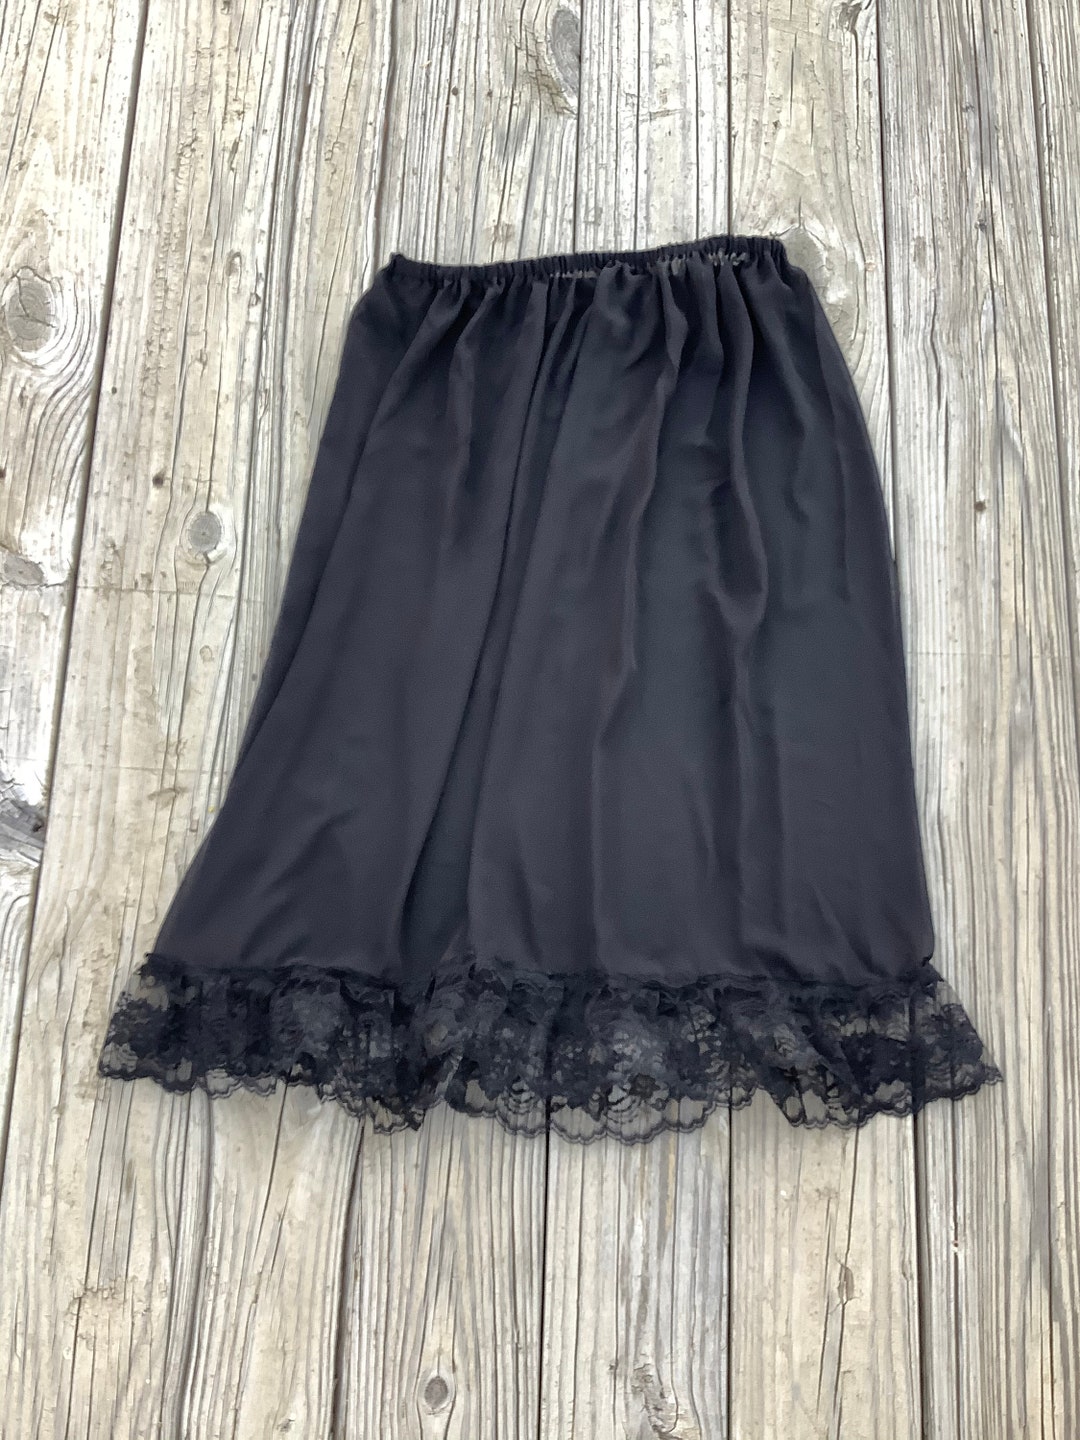 Black Lace Extender Slip Long Petticoat Slip Victorian Lace - Etsy